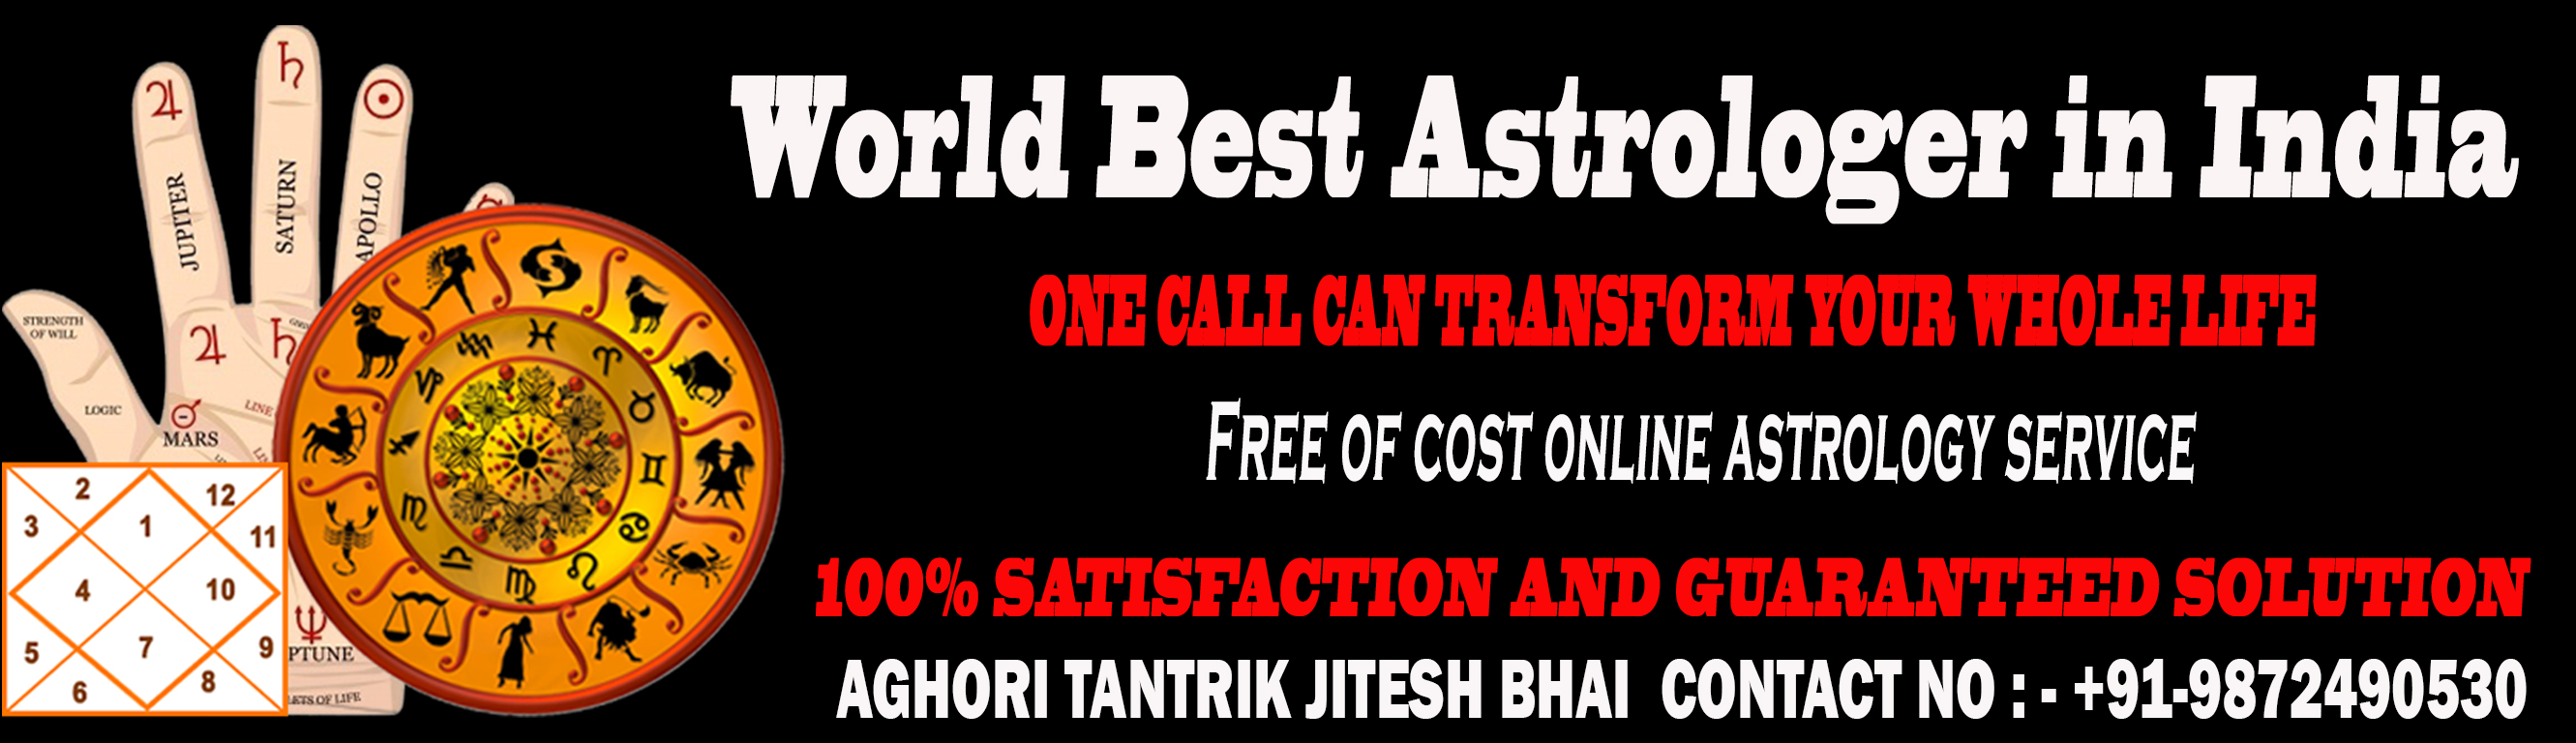 world_best_astrologer_in_india.jpg